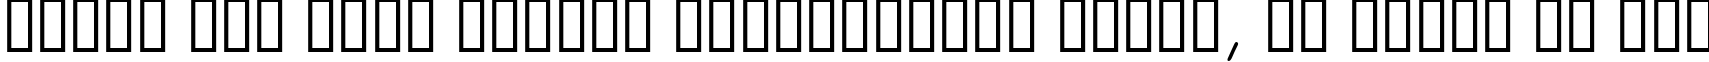 Пример написания шрифтом Sketchpad Note  Italic текста на русском